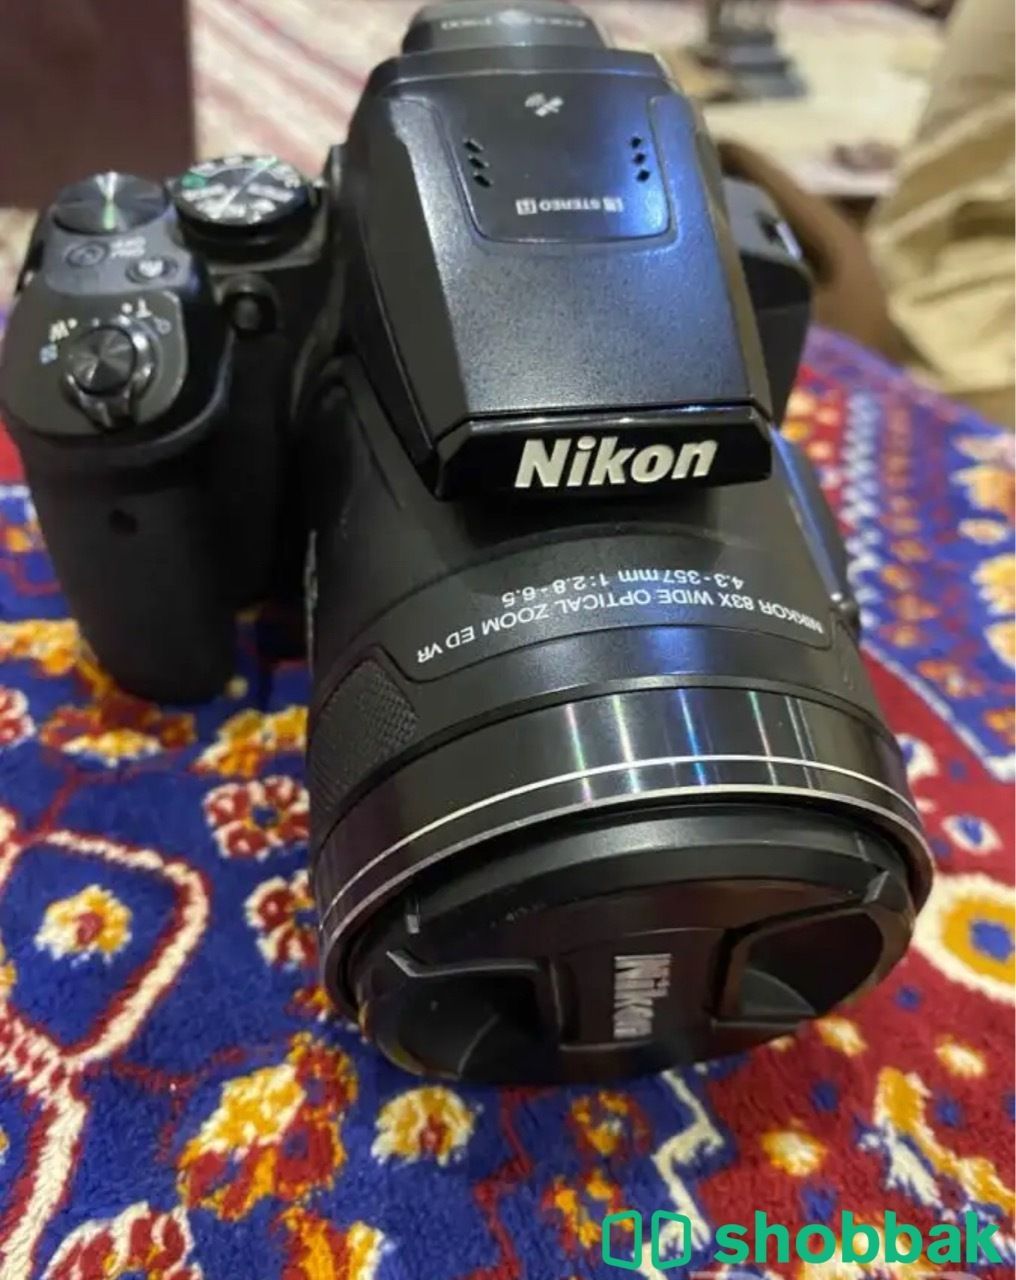 كاميرا جديده استعمال قليل  Shobbak Saudi Arabia